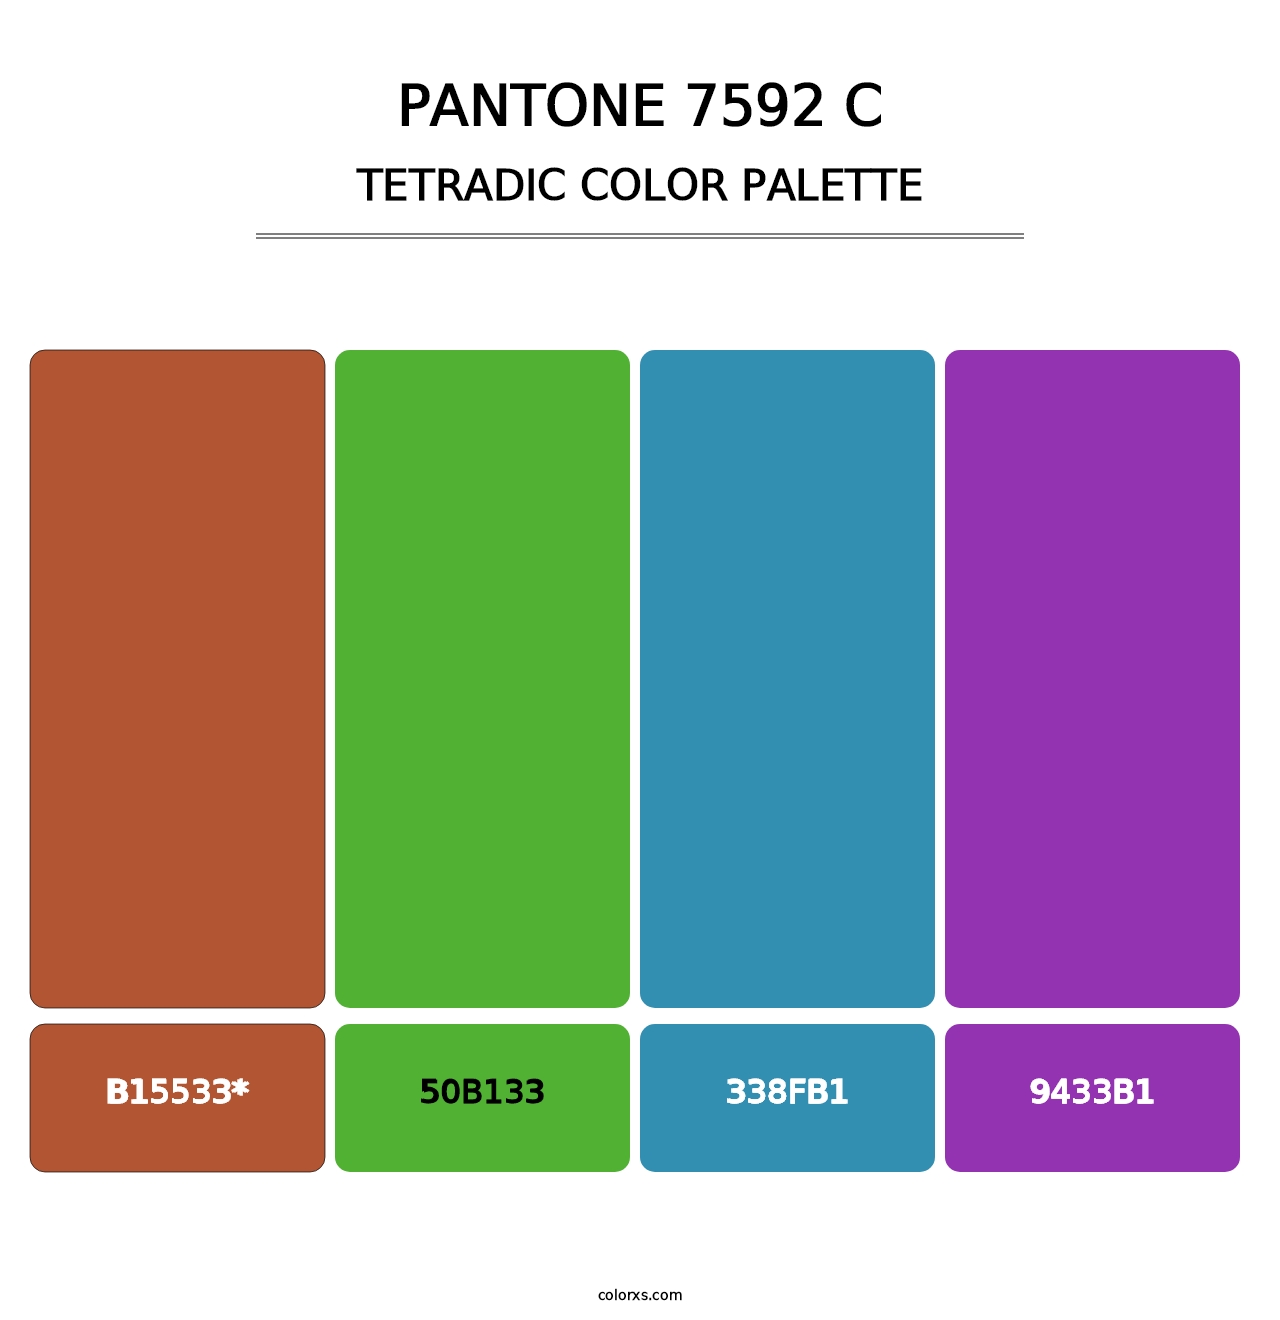 PANTONE 7592 C - Tetradic Color Palette